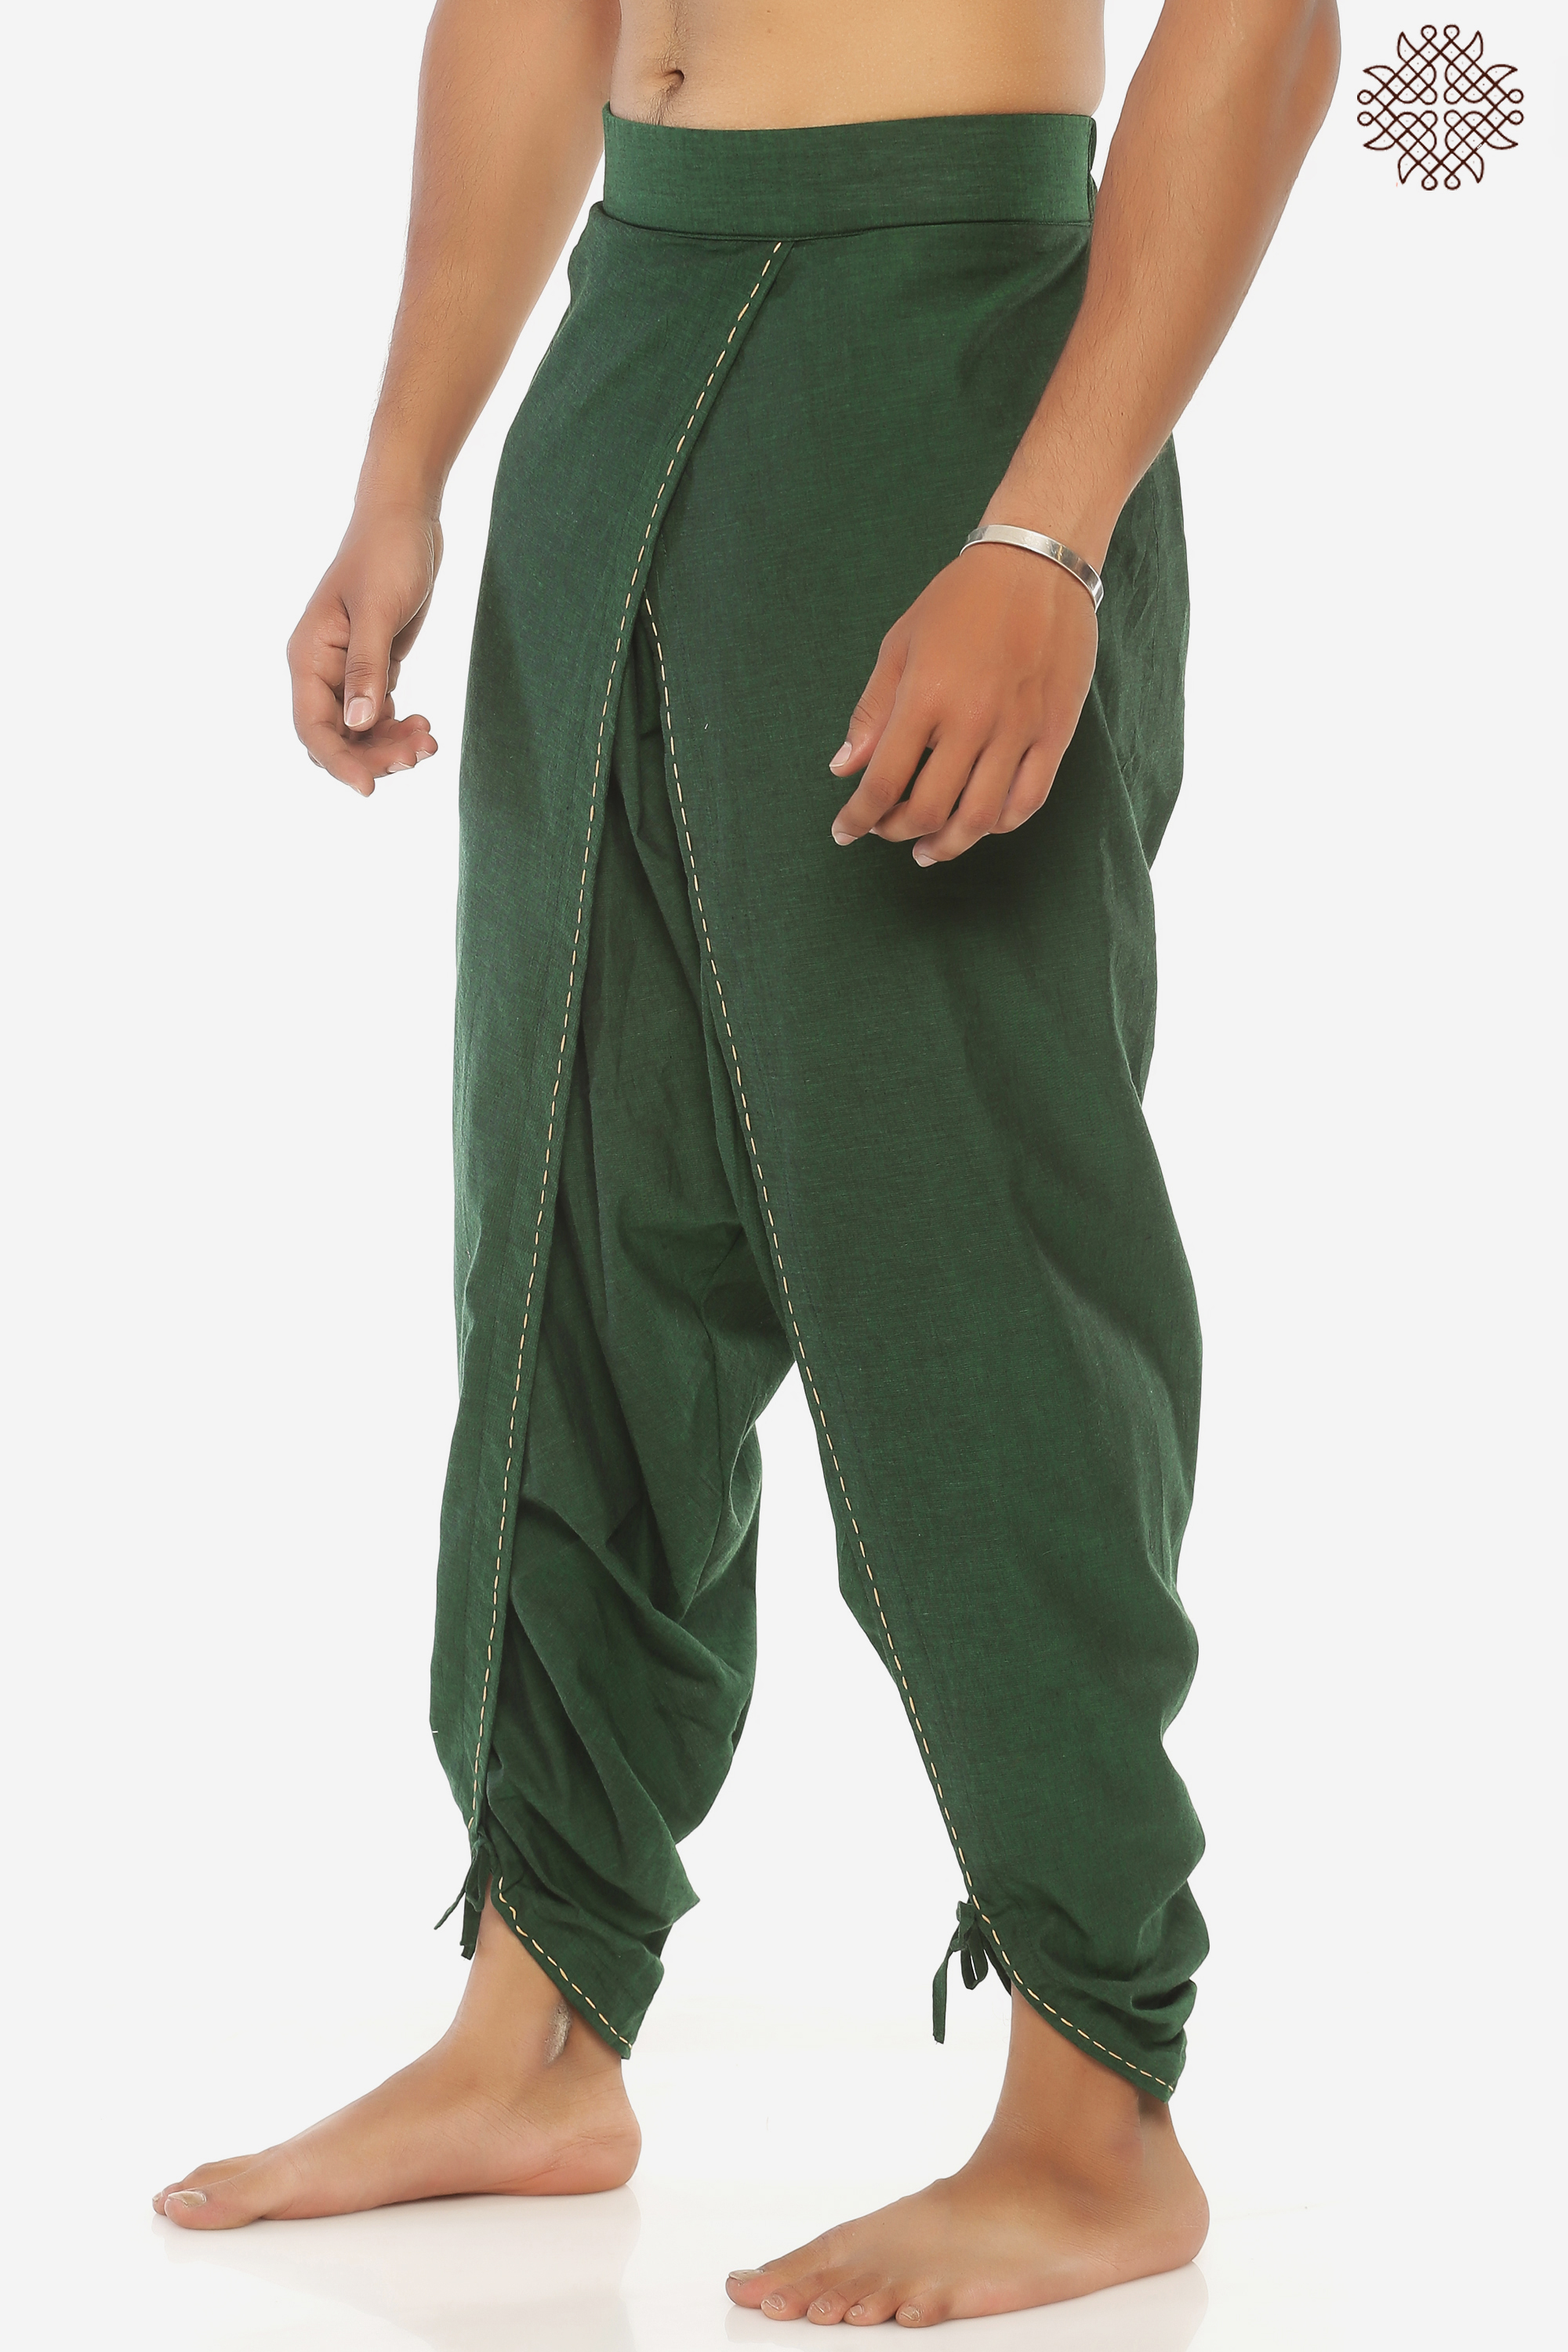 Buy Green Elasticatedwaist Cotton Dhoti pants by Jaypore Online at  Jayporecom